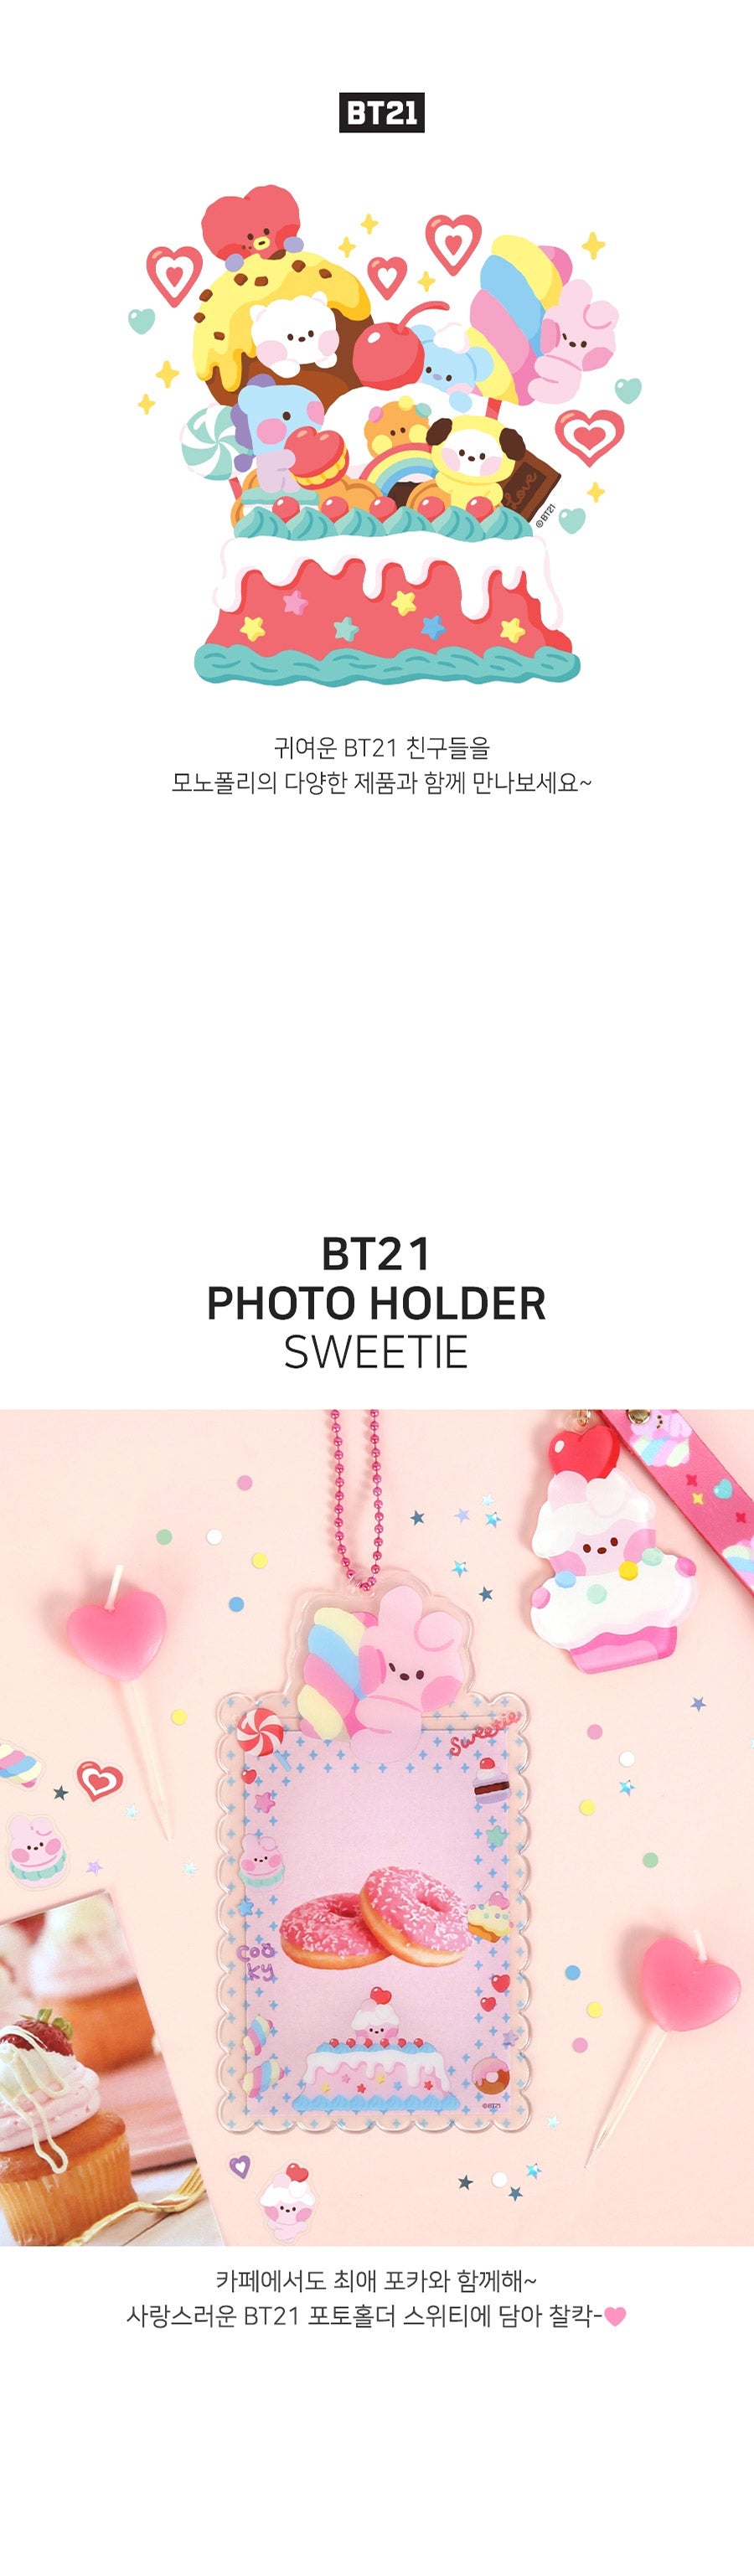 BT21 Sweetie Photocard Holder